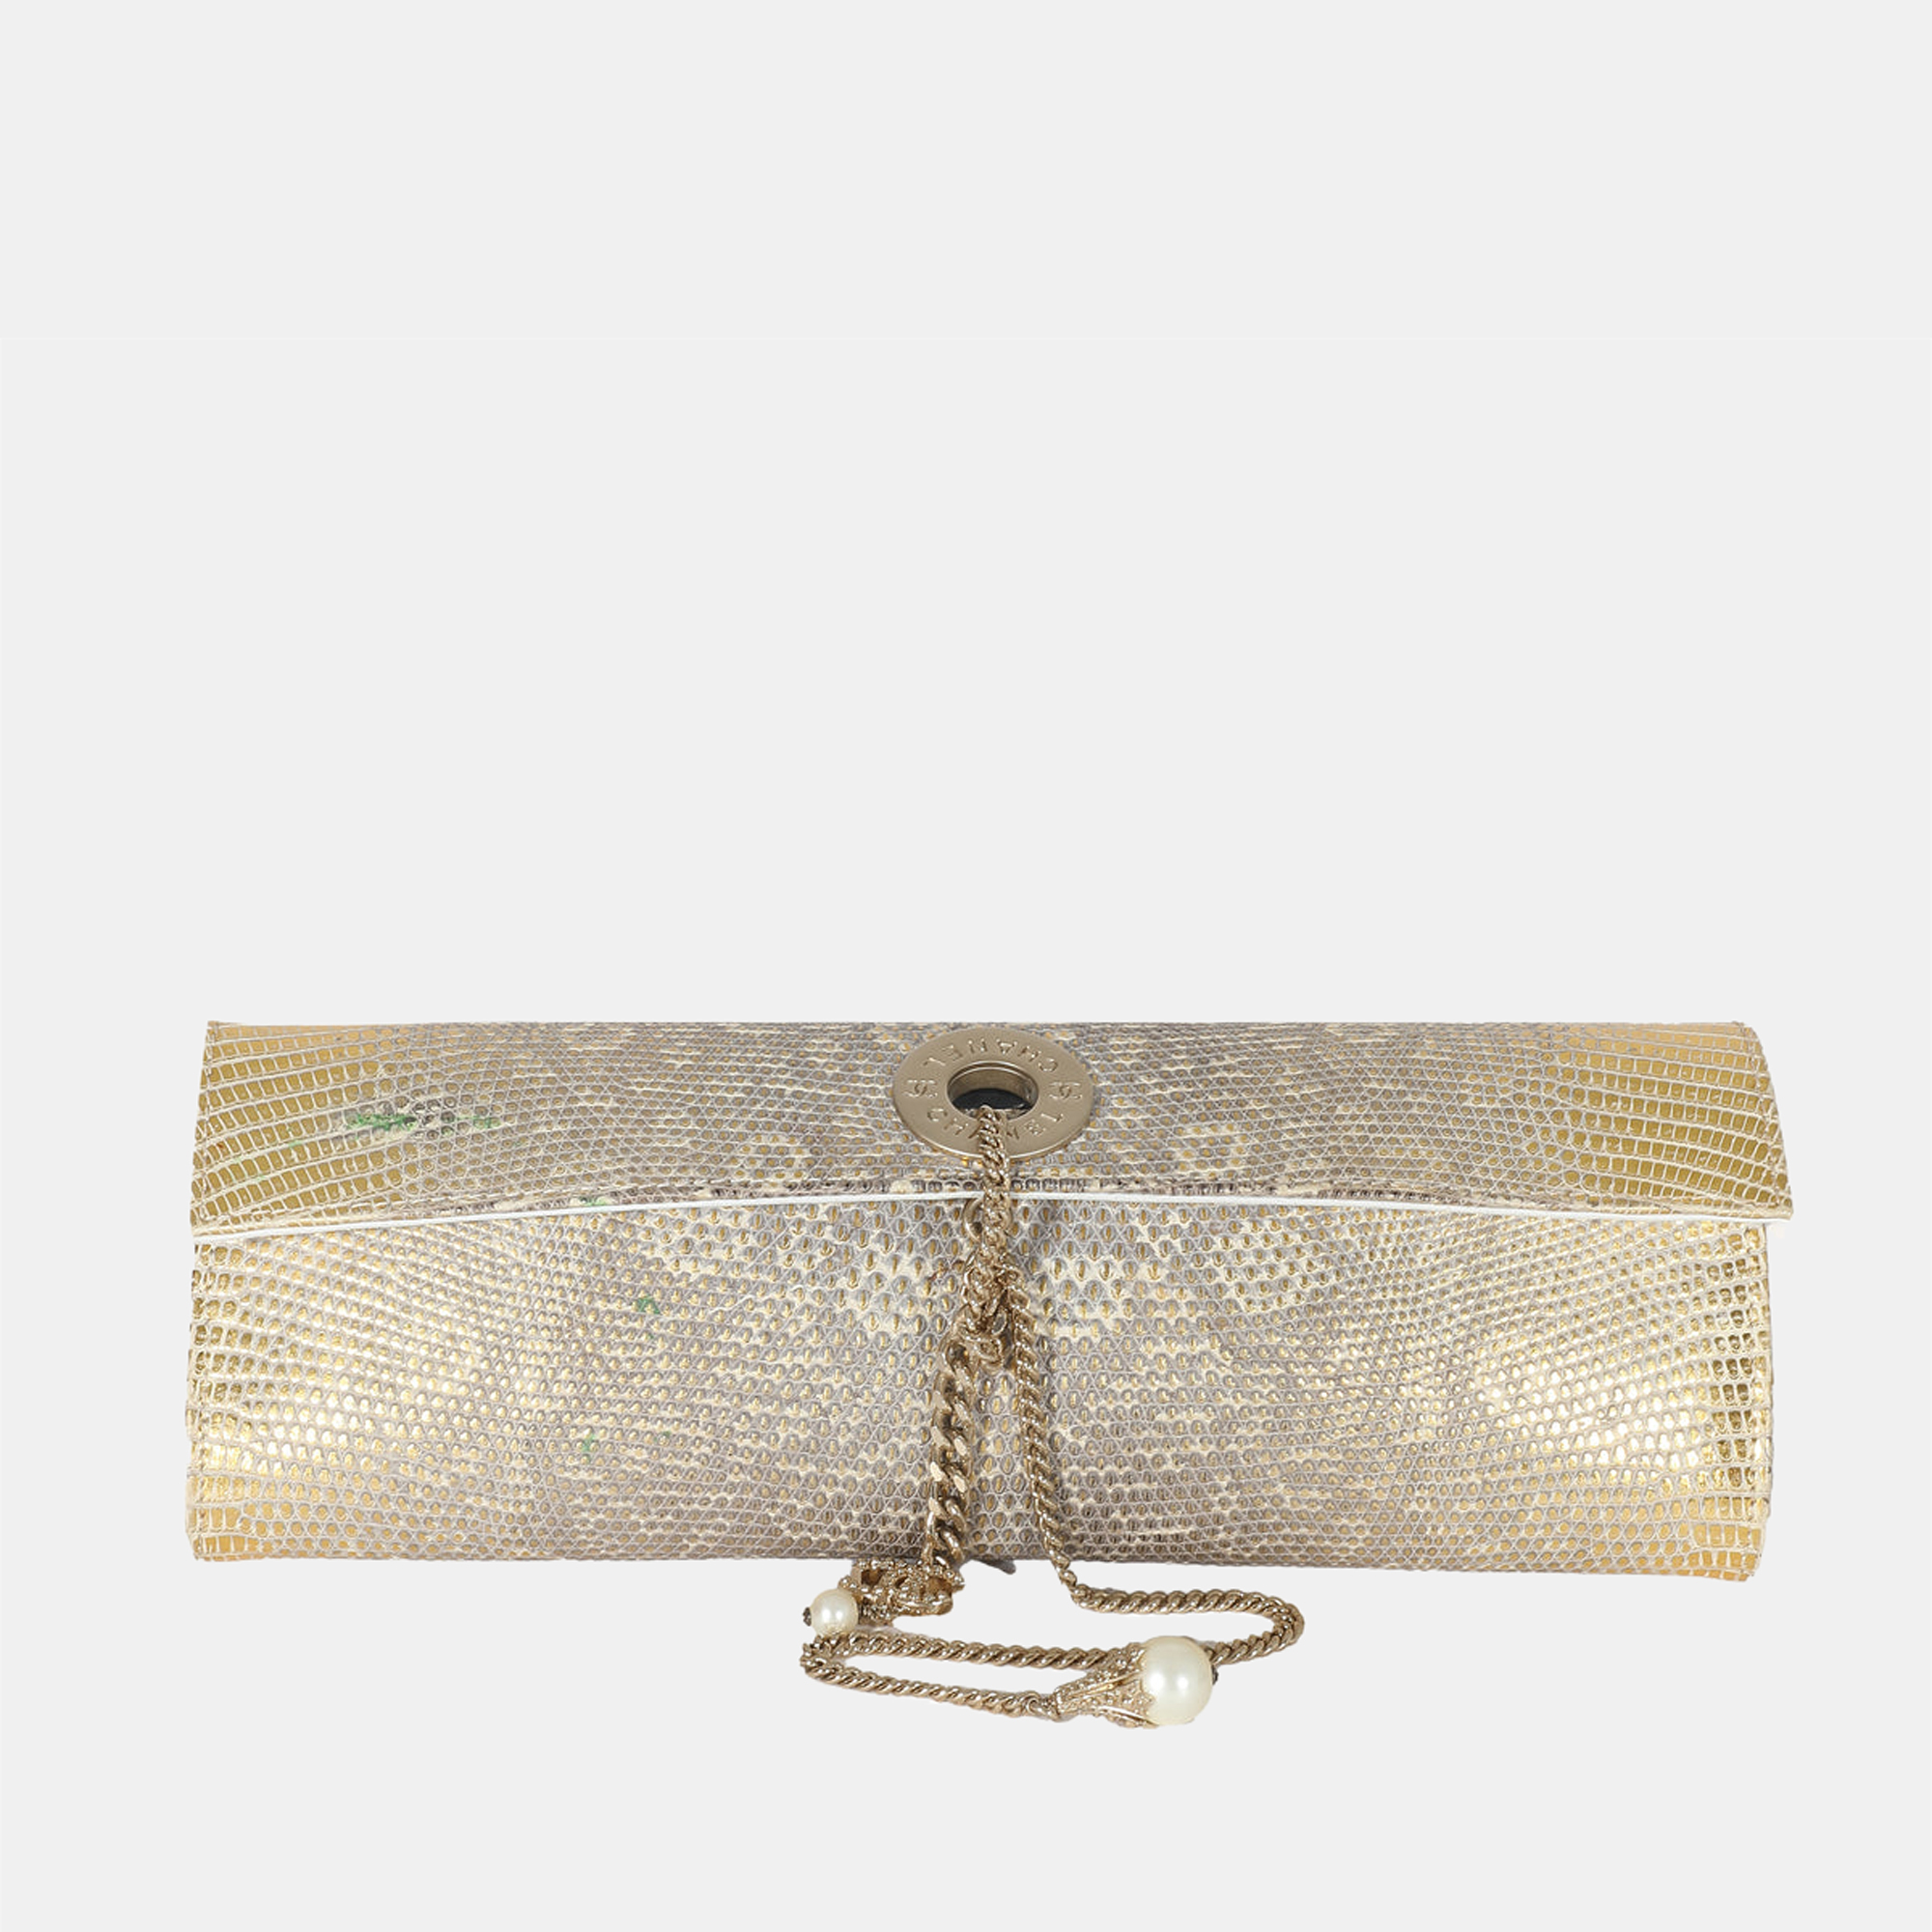 Chanel vintage gold lizard tube flap clutch